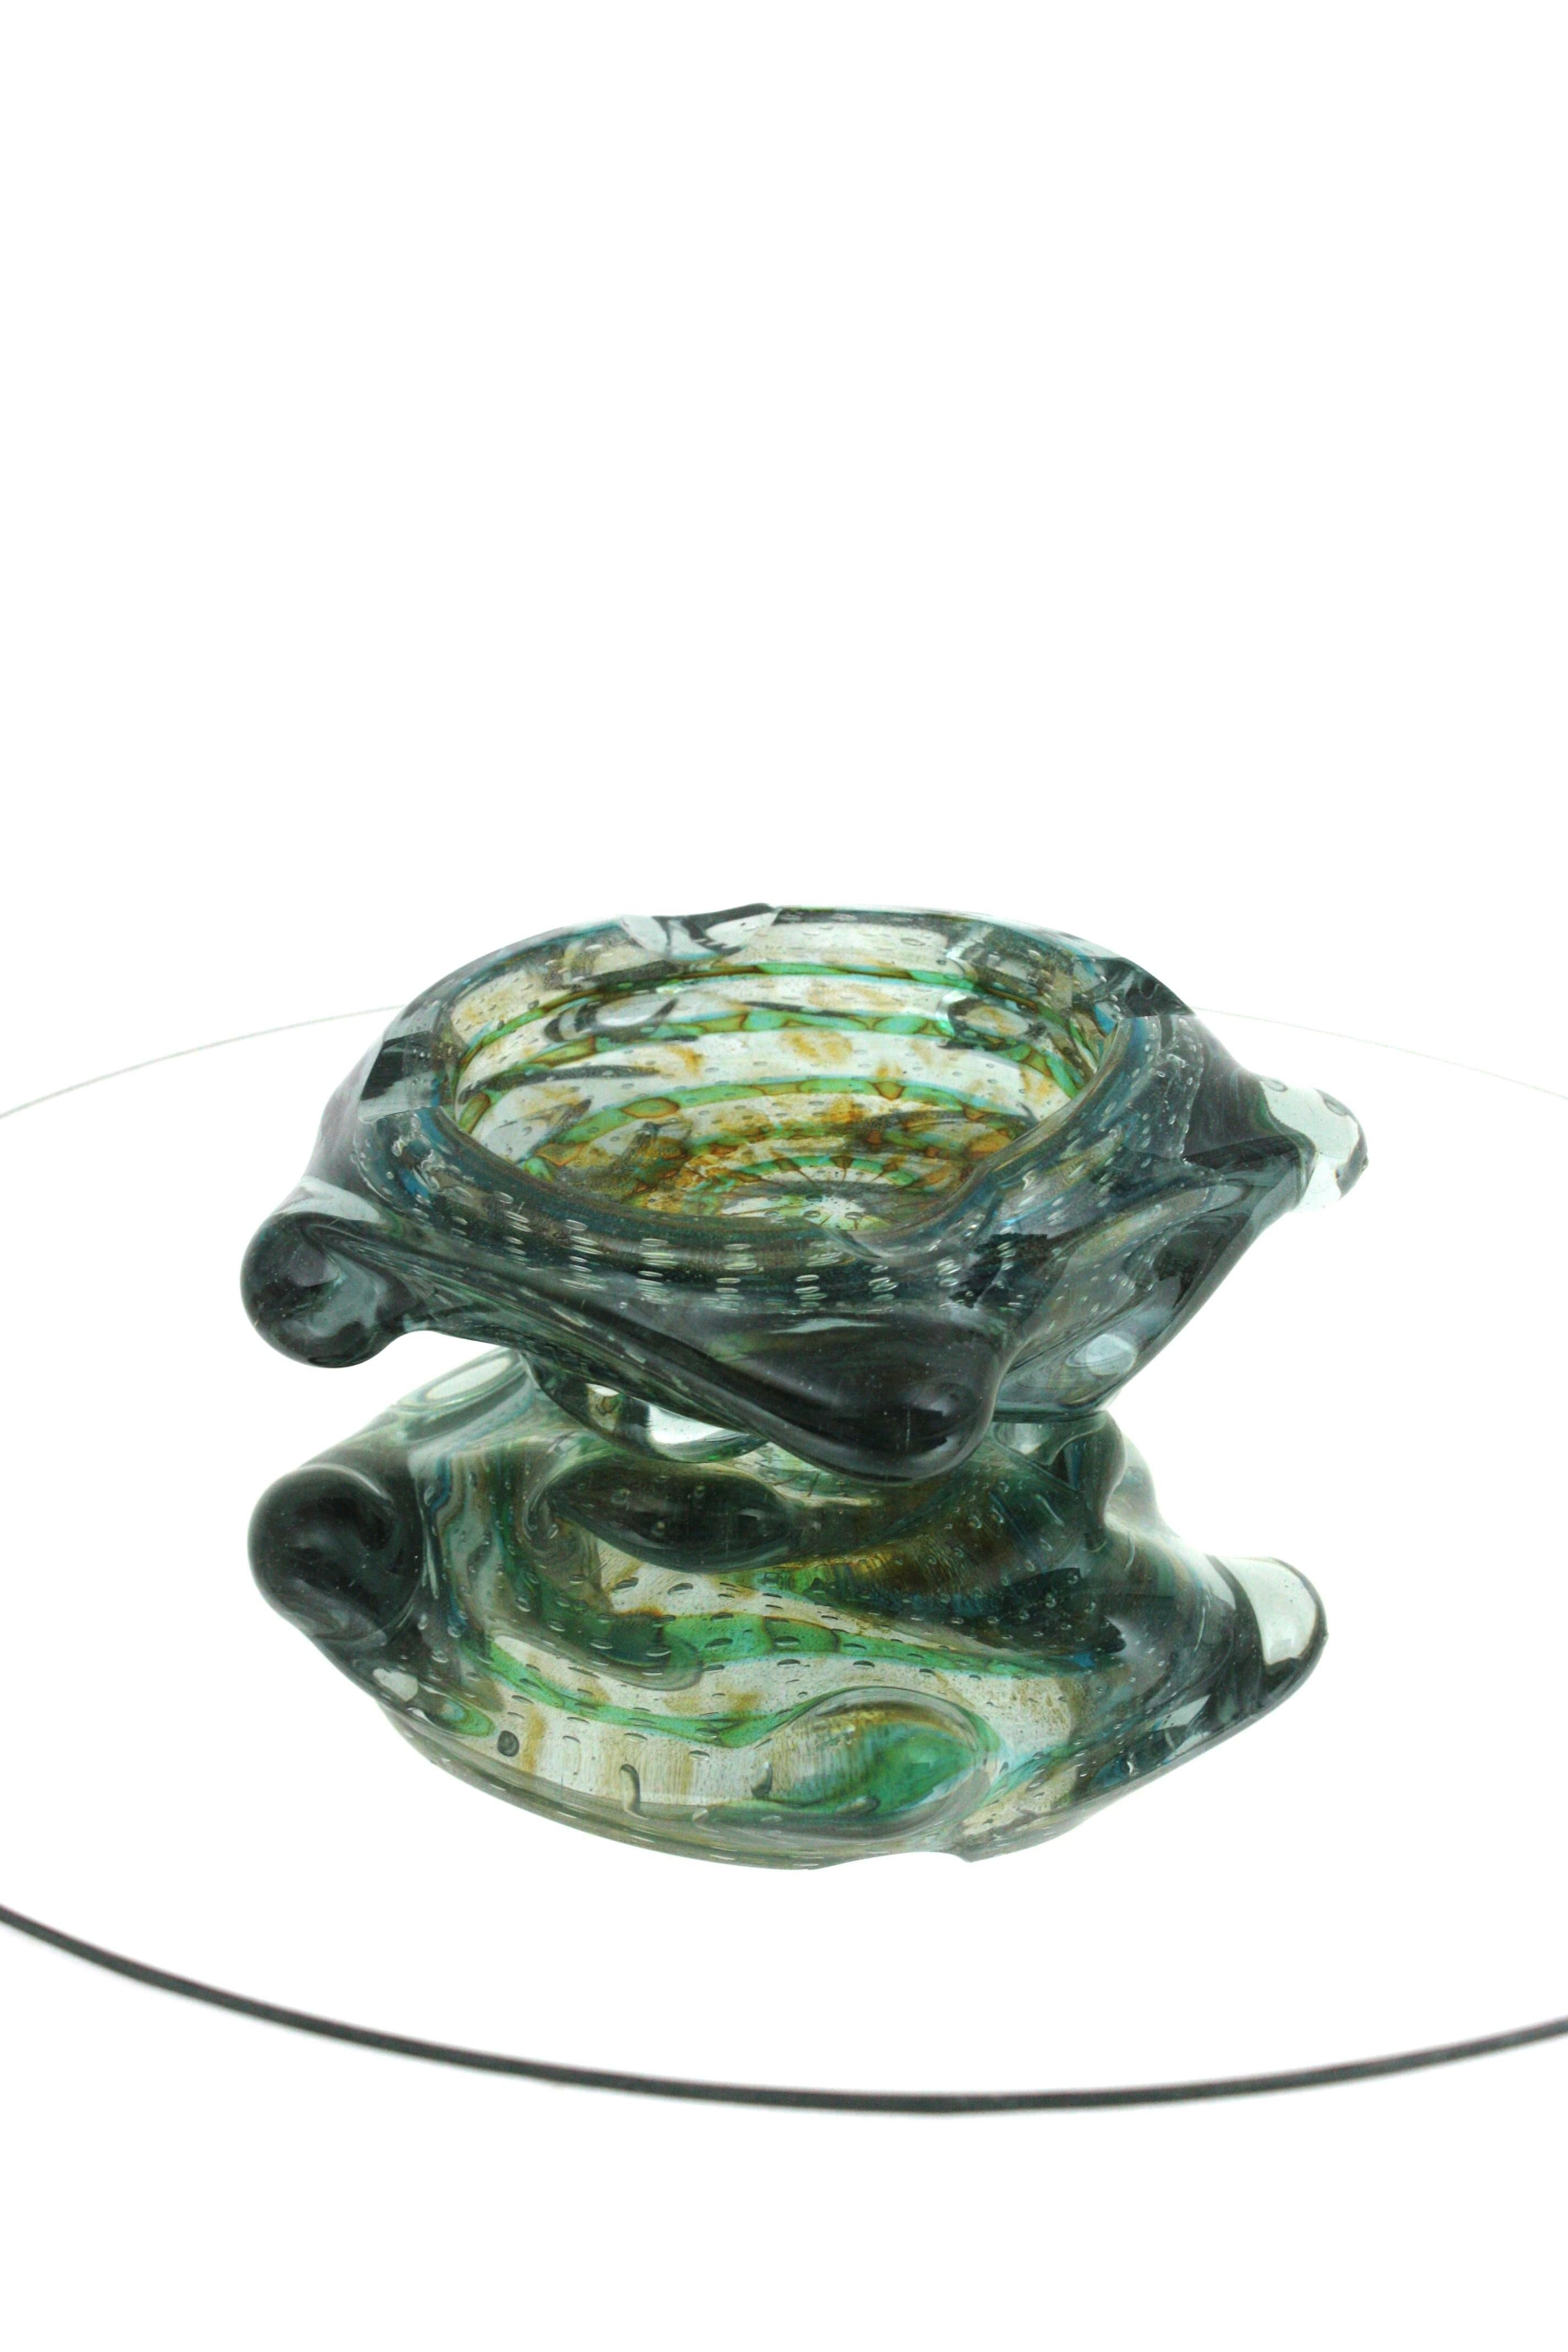 Carlo Scarpa Gold Flecks Murano Art Glass Bowl, Italy, 1950s For Sale 3